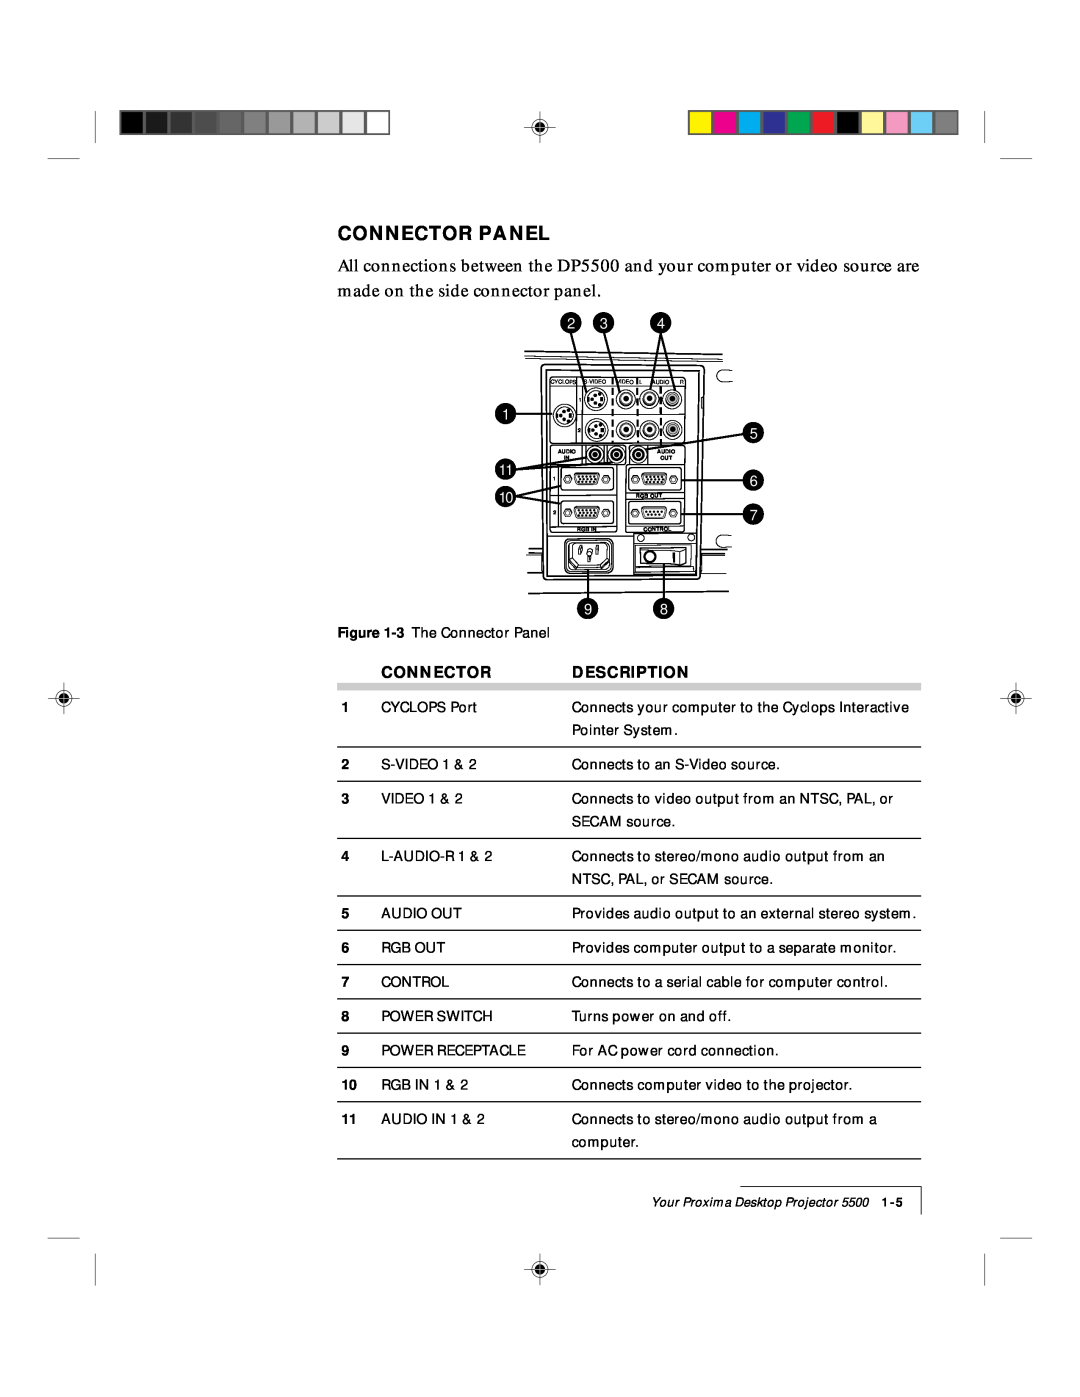 Proxima ASA DP5500 manual Connector Panel, Description 